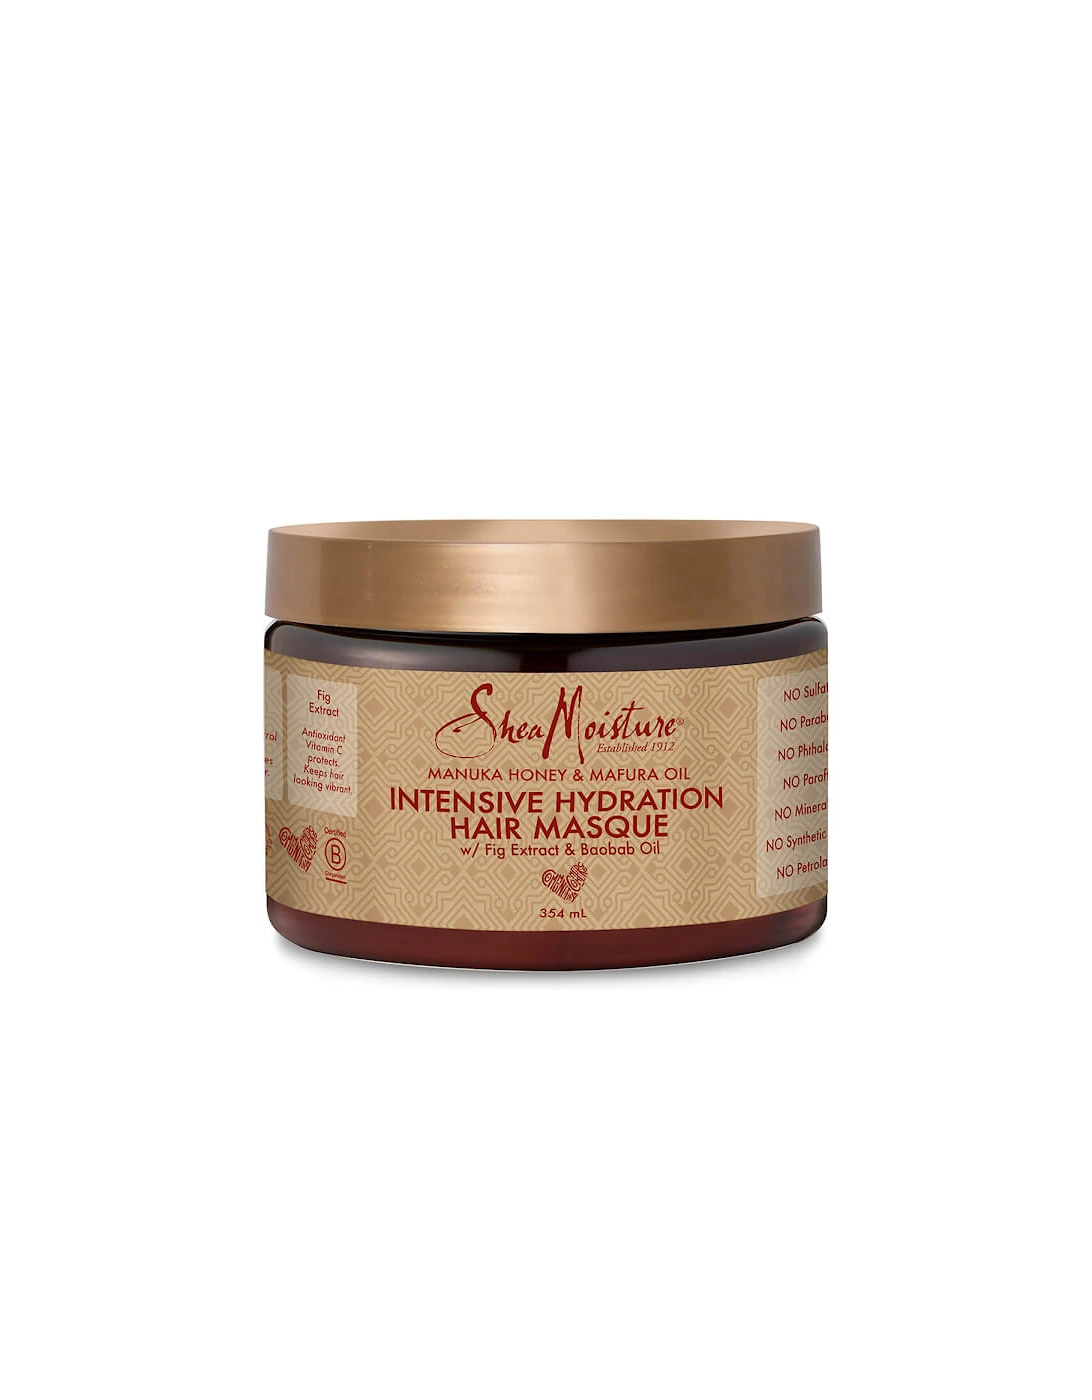 Manuka Honey & Mafura Oil Intensive Hydration Hair Masque 354ml - SheaMoisture, 2 of 1